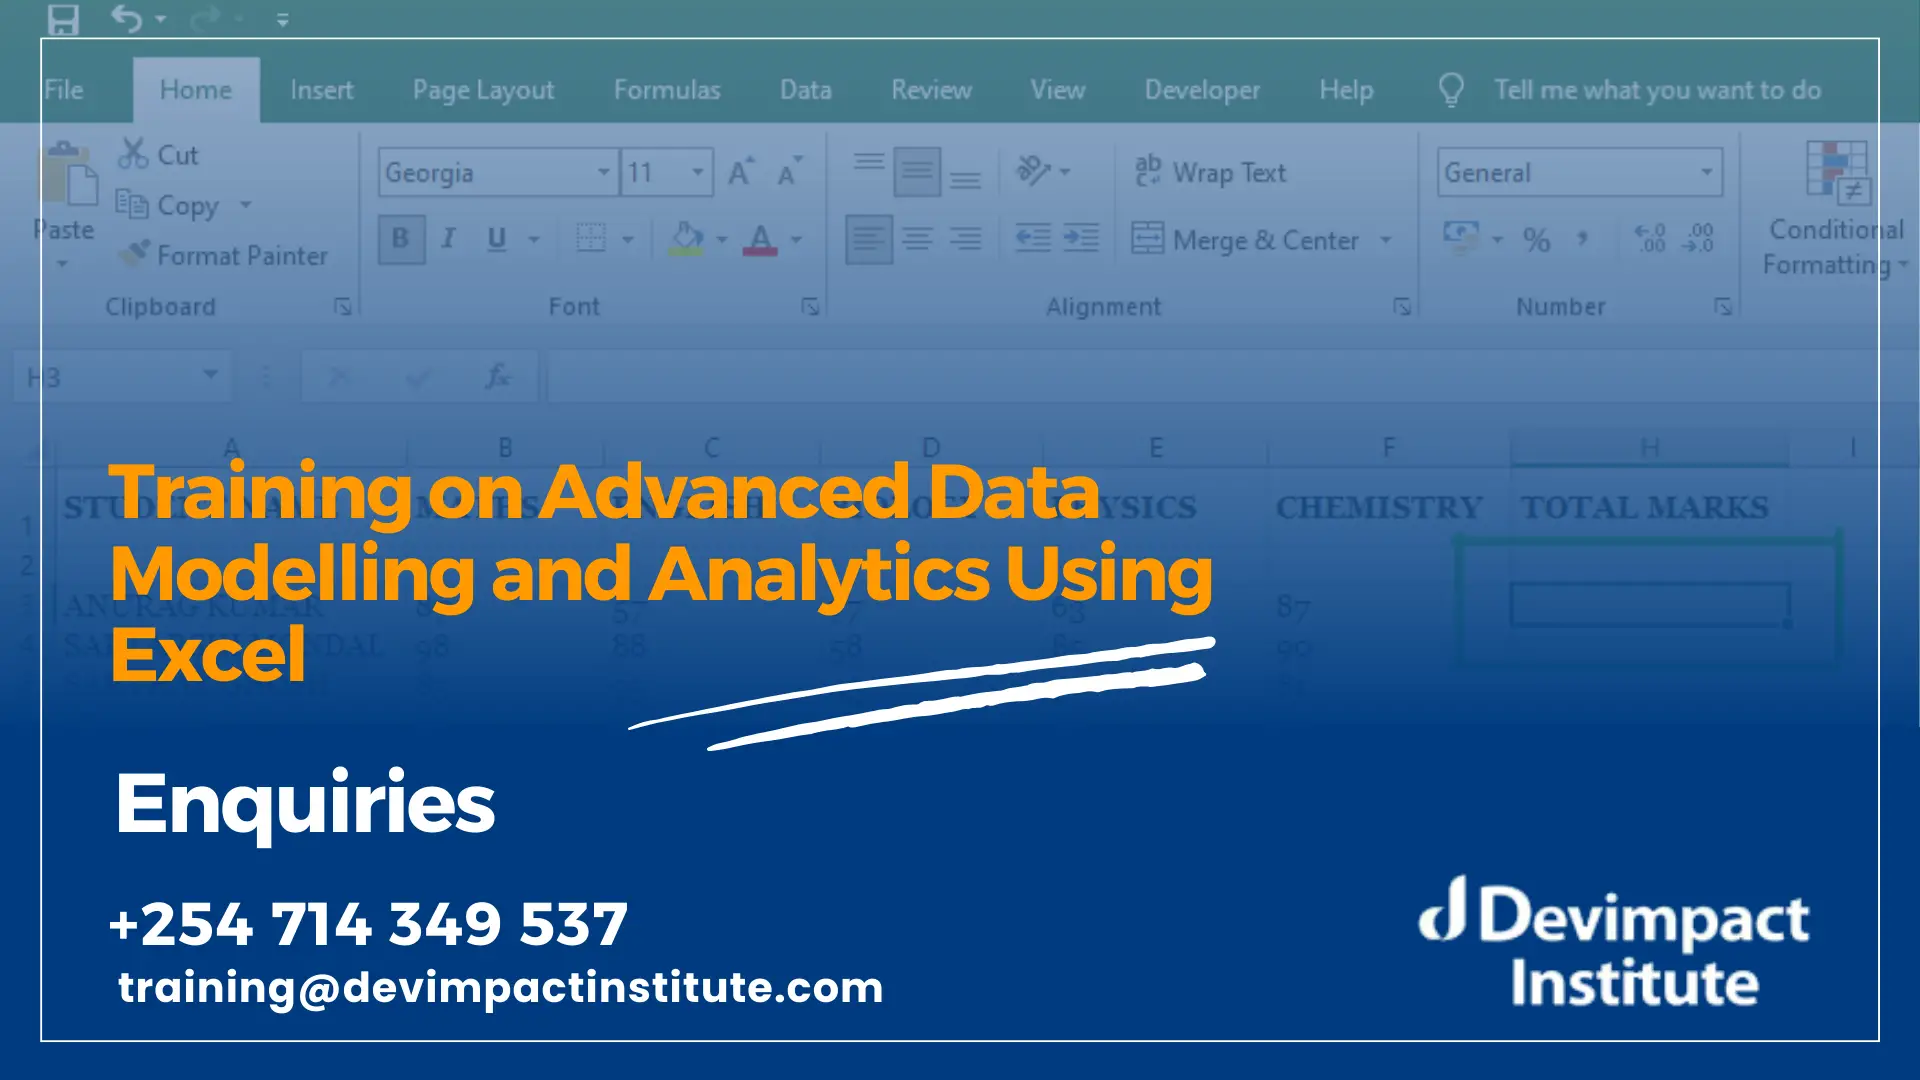 Training on Advanced Data Modelling and Analytics Using Excel, Devimpact Institute, Nairobi, Kenya